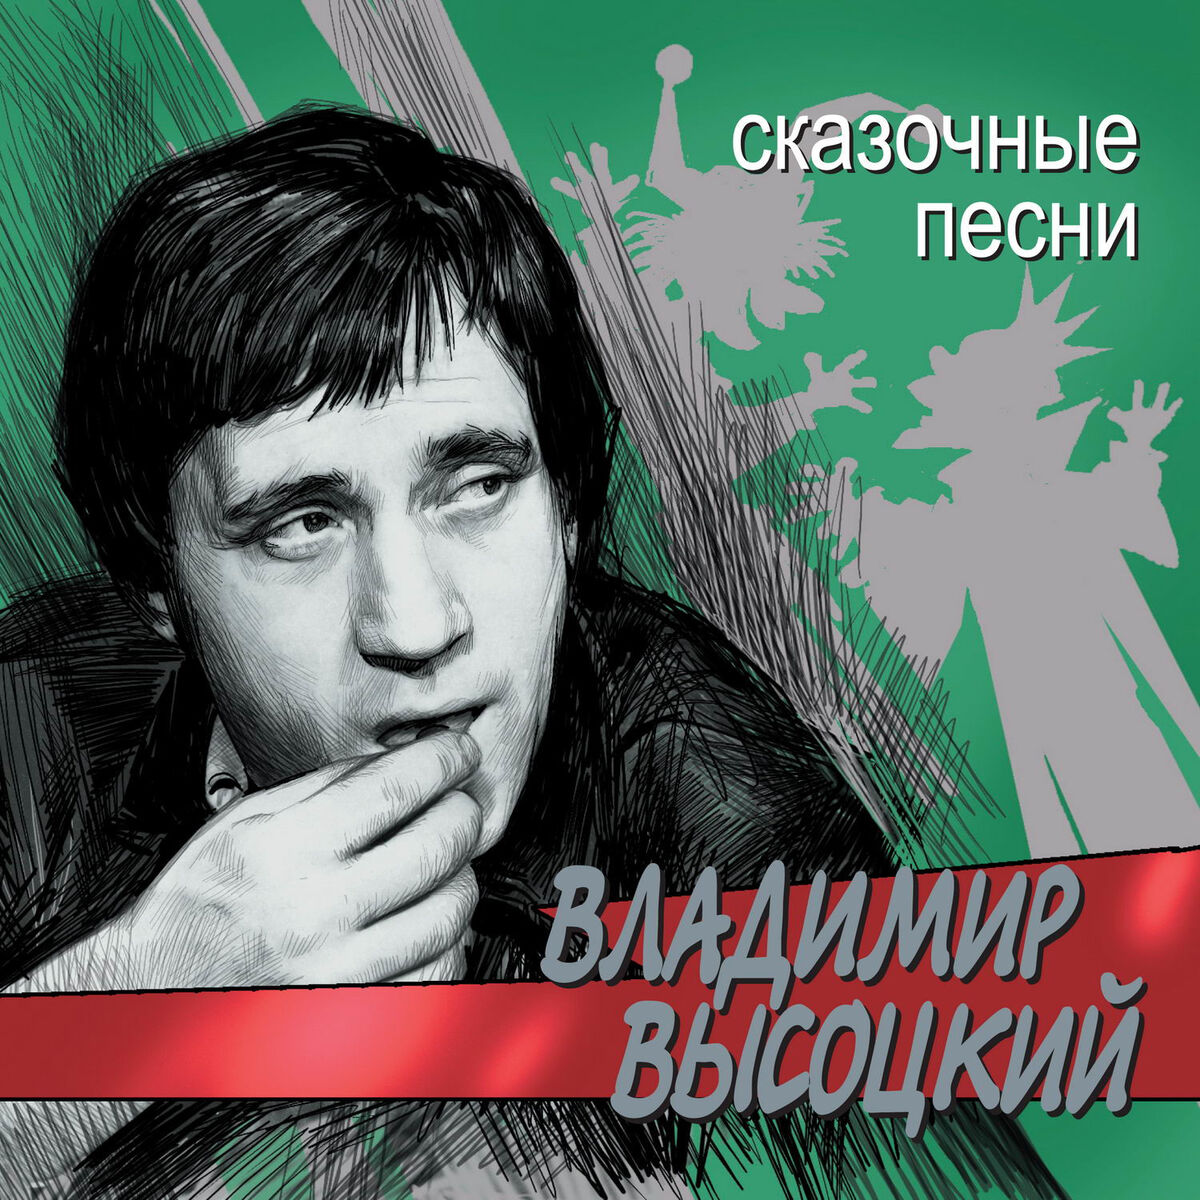 Vladimir Vysotsky: albums